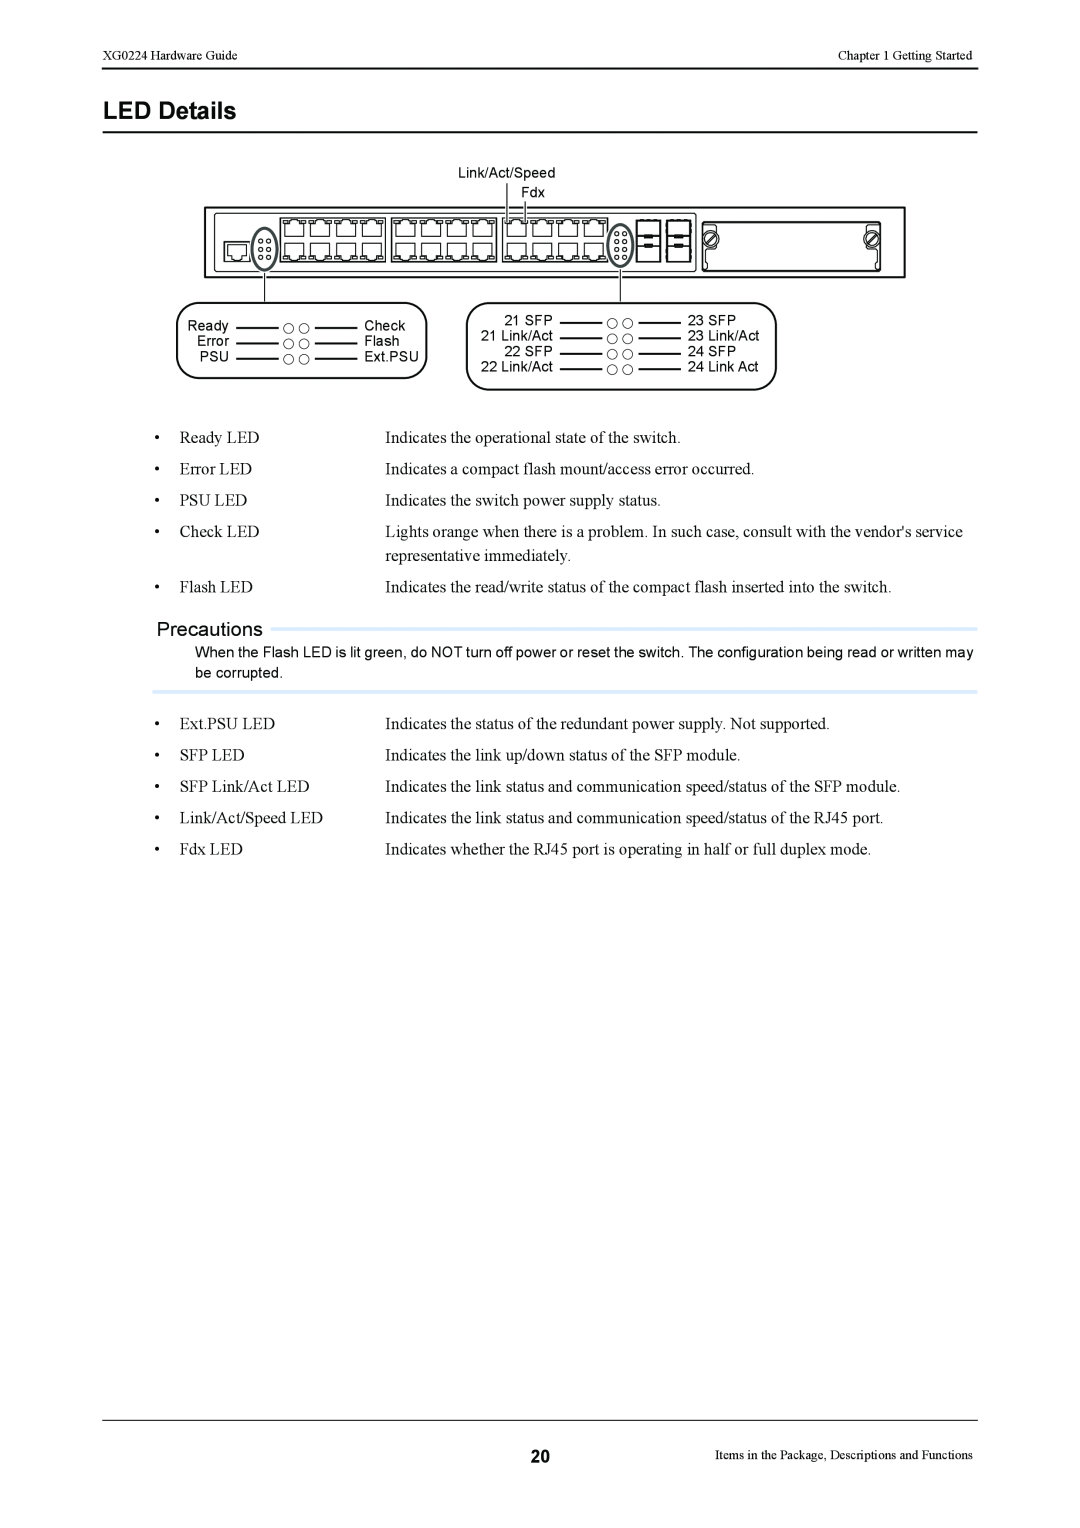 Fujitsu XG0224 manual LED Details 